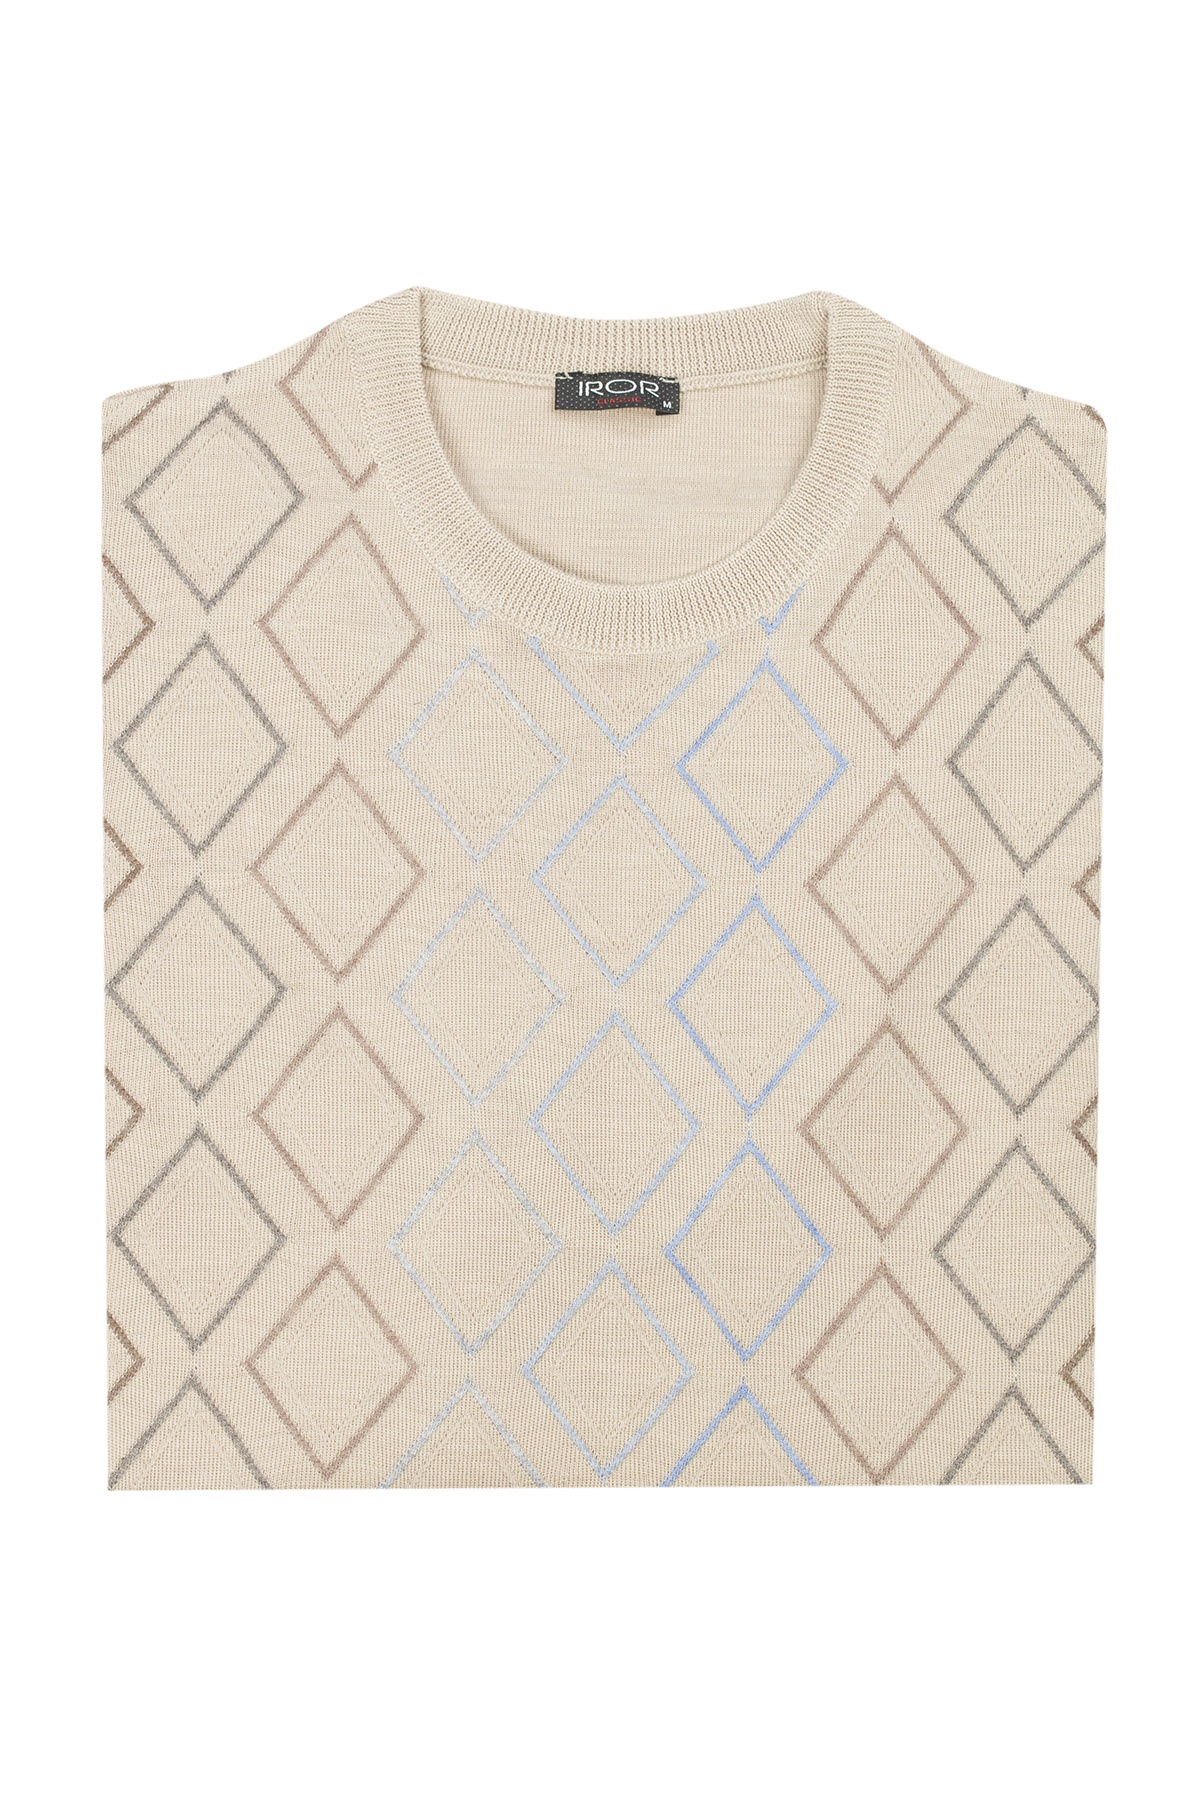 IROR – Sweater Pack (M-L-XL-2XL) 8024-01 – IROR